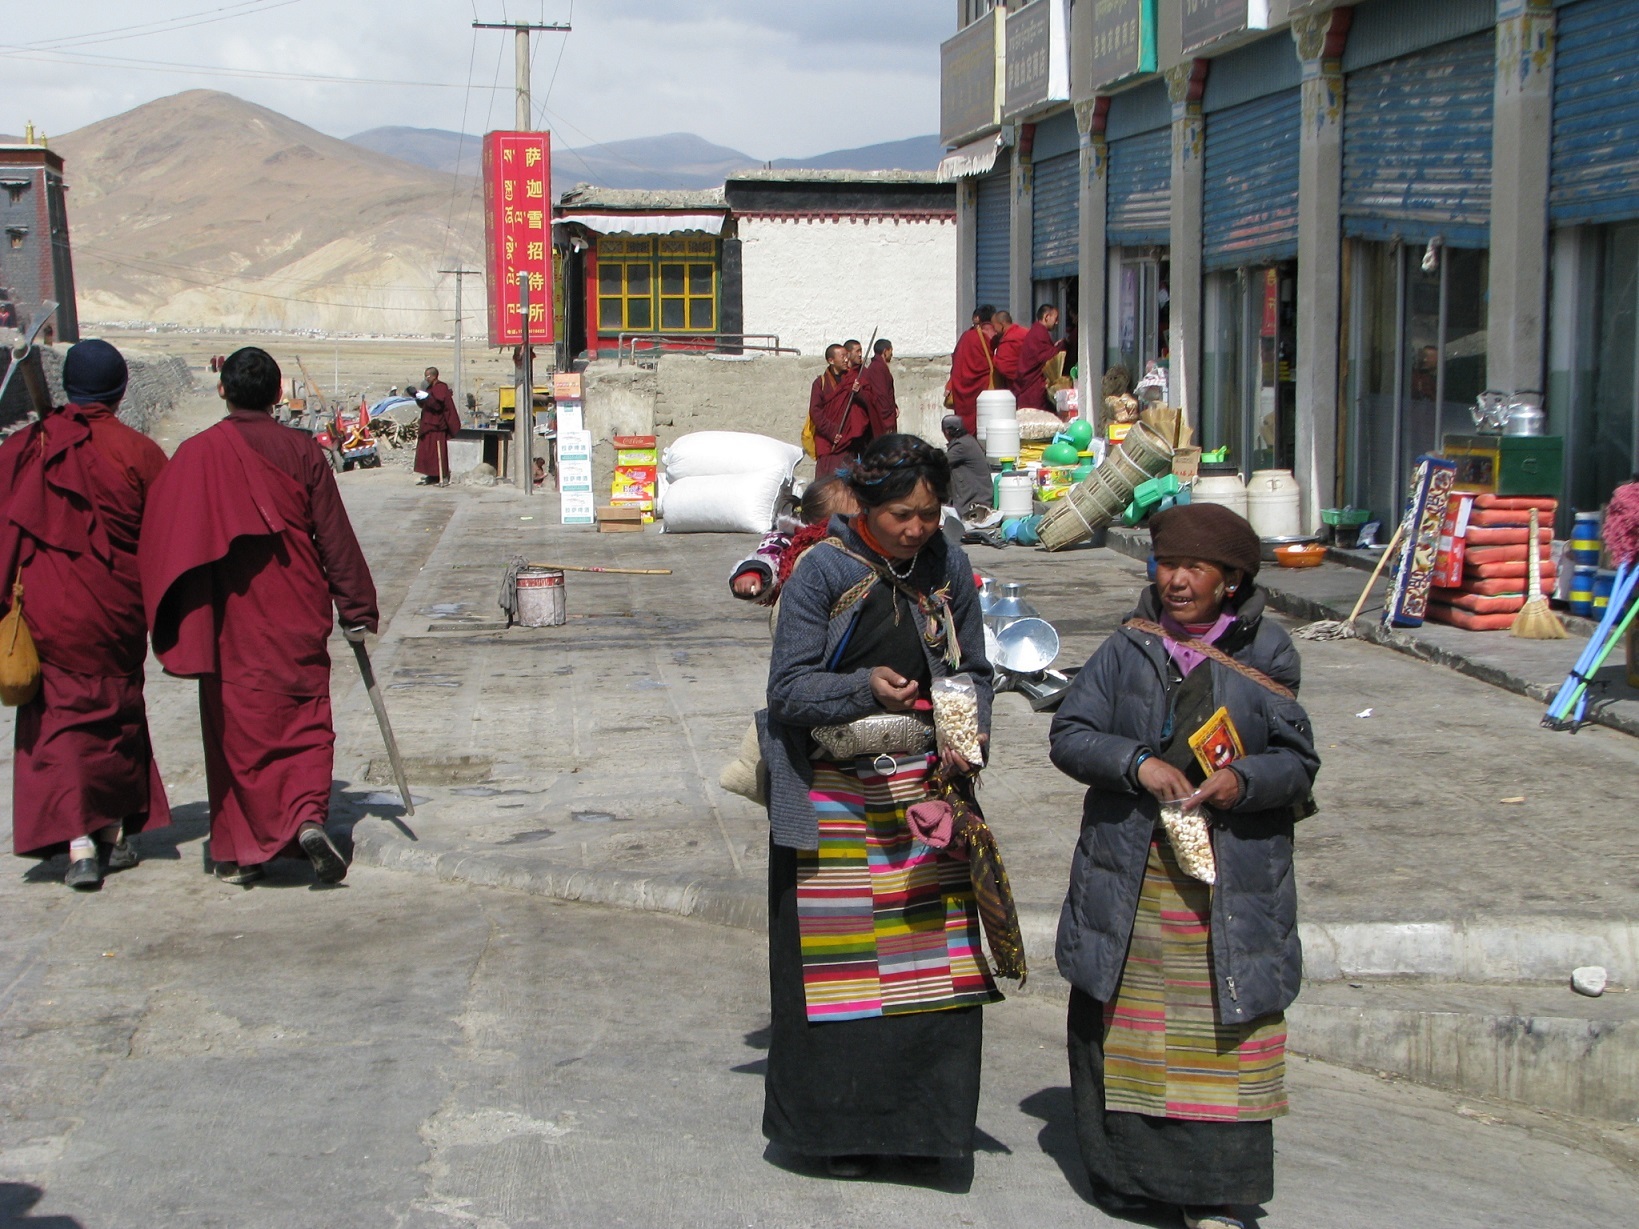 tibet-med-swed-asia-travels--133